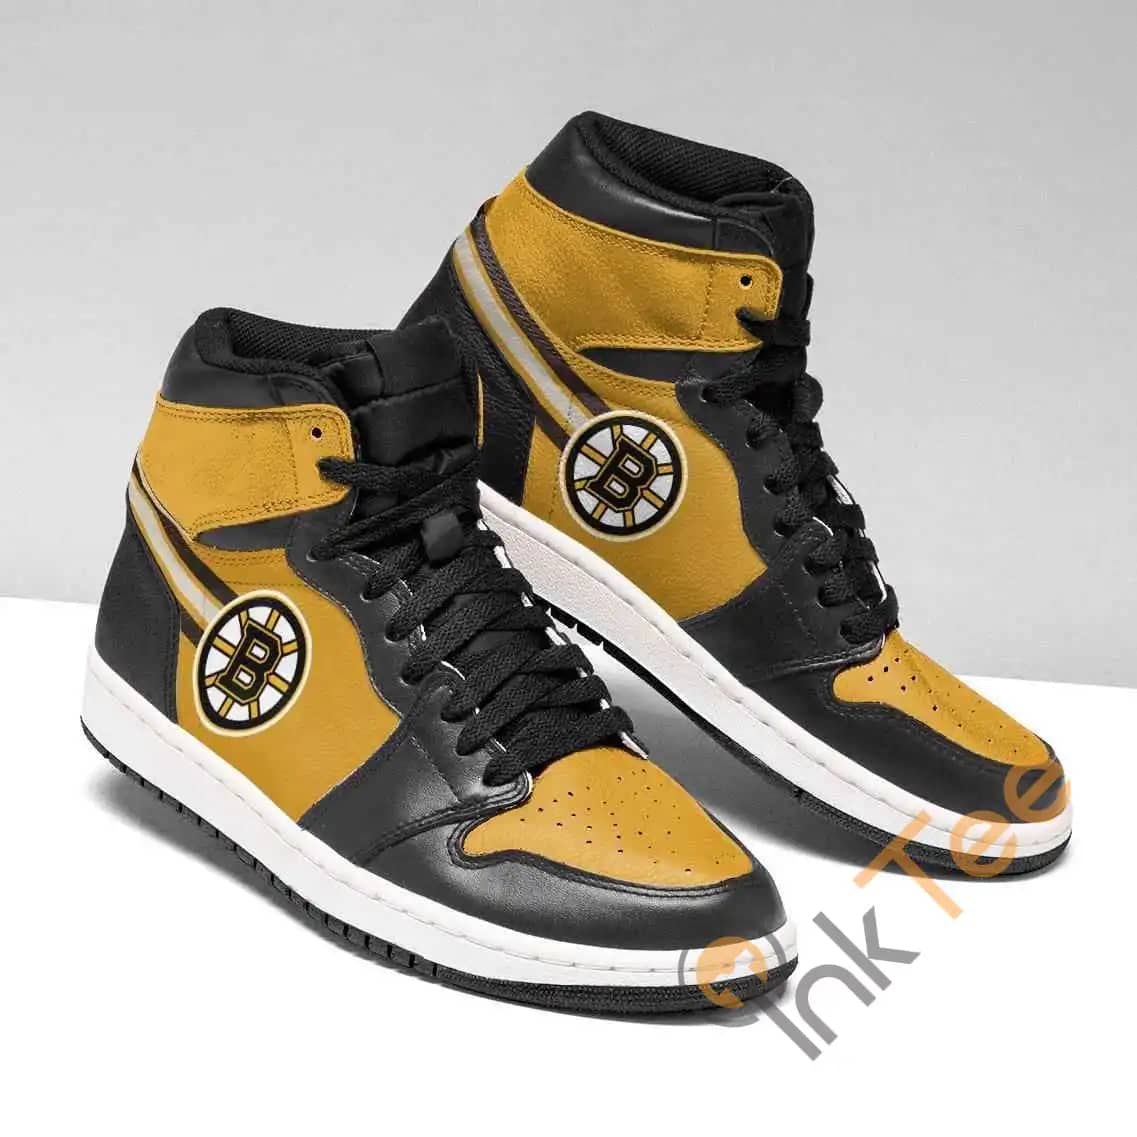 Boston Bruins Nhl Air Jordan Shoes